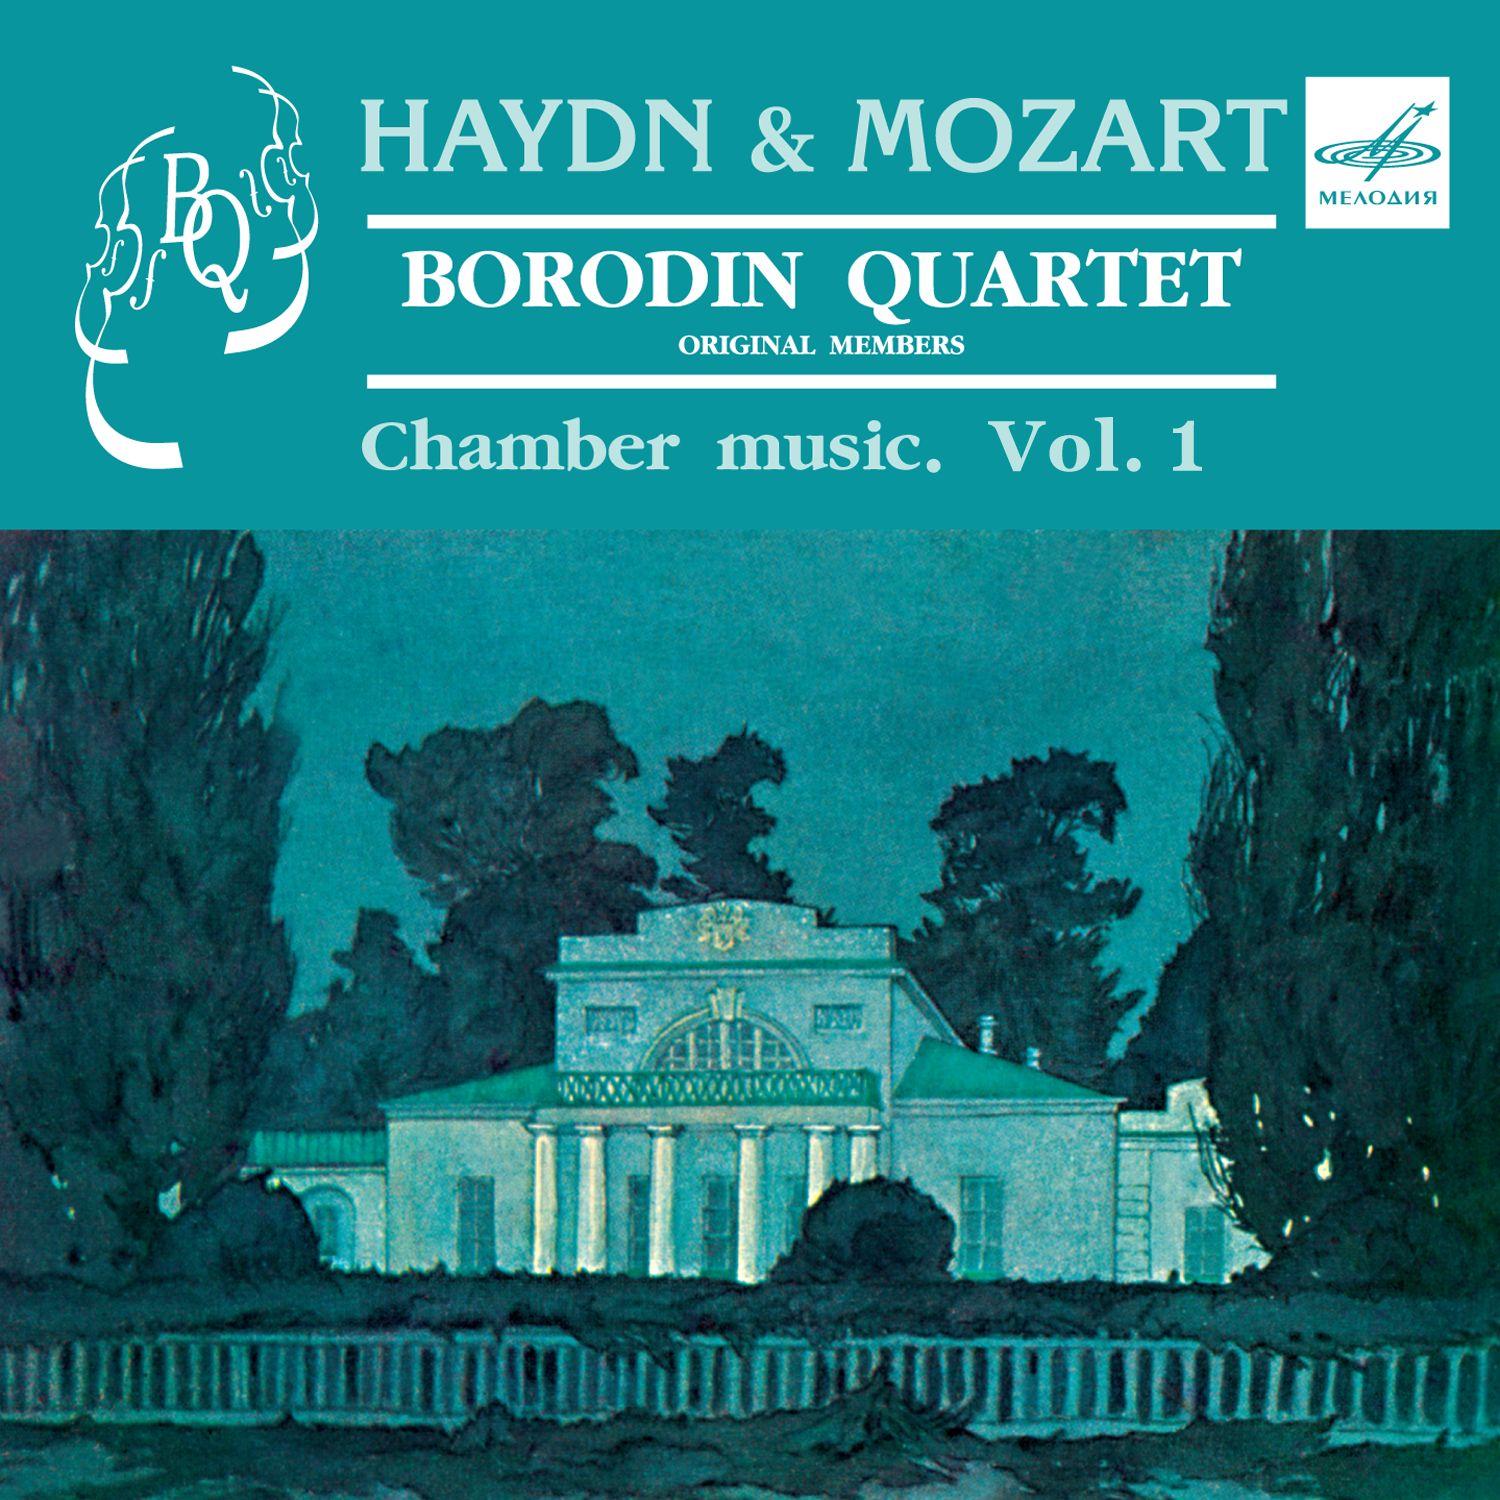 Borodin Quartet Performs Chamber Music, Vol. 1